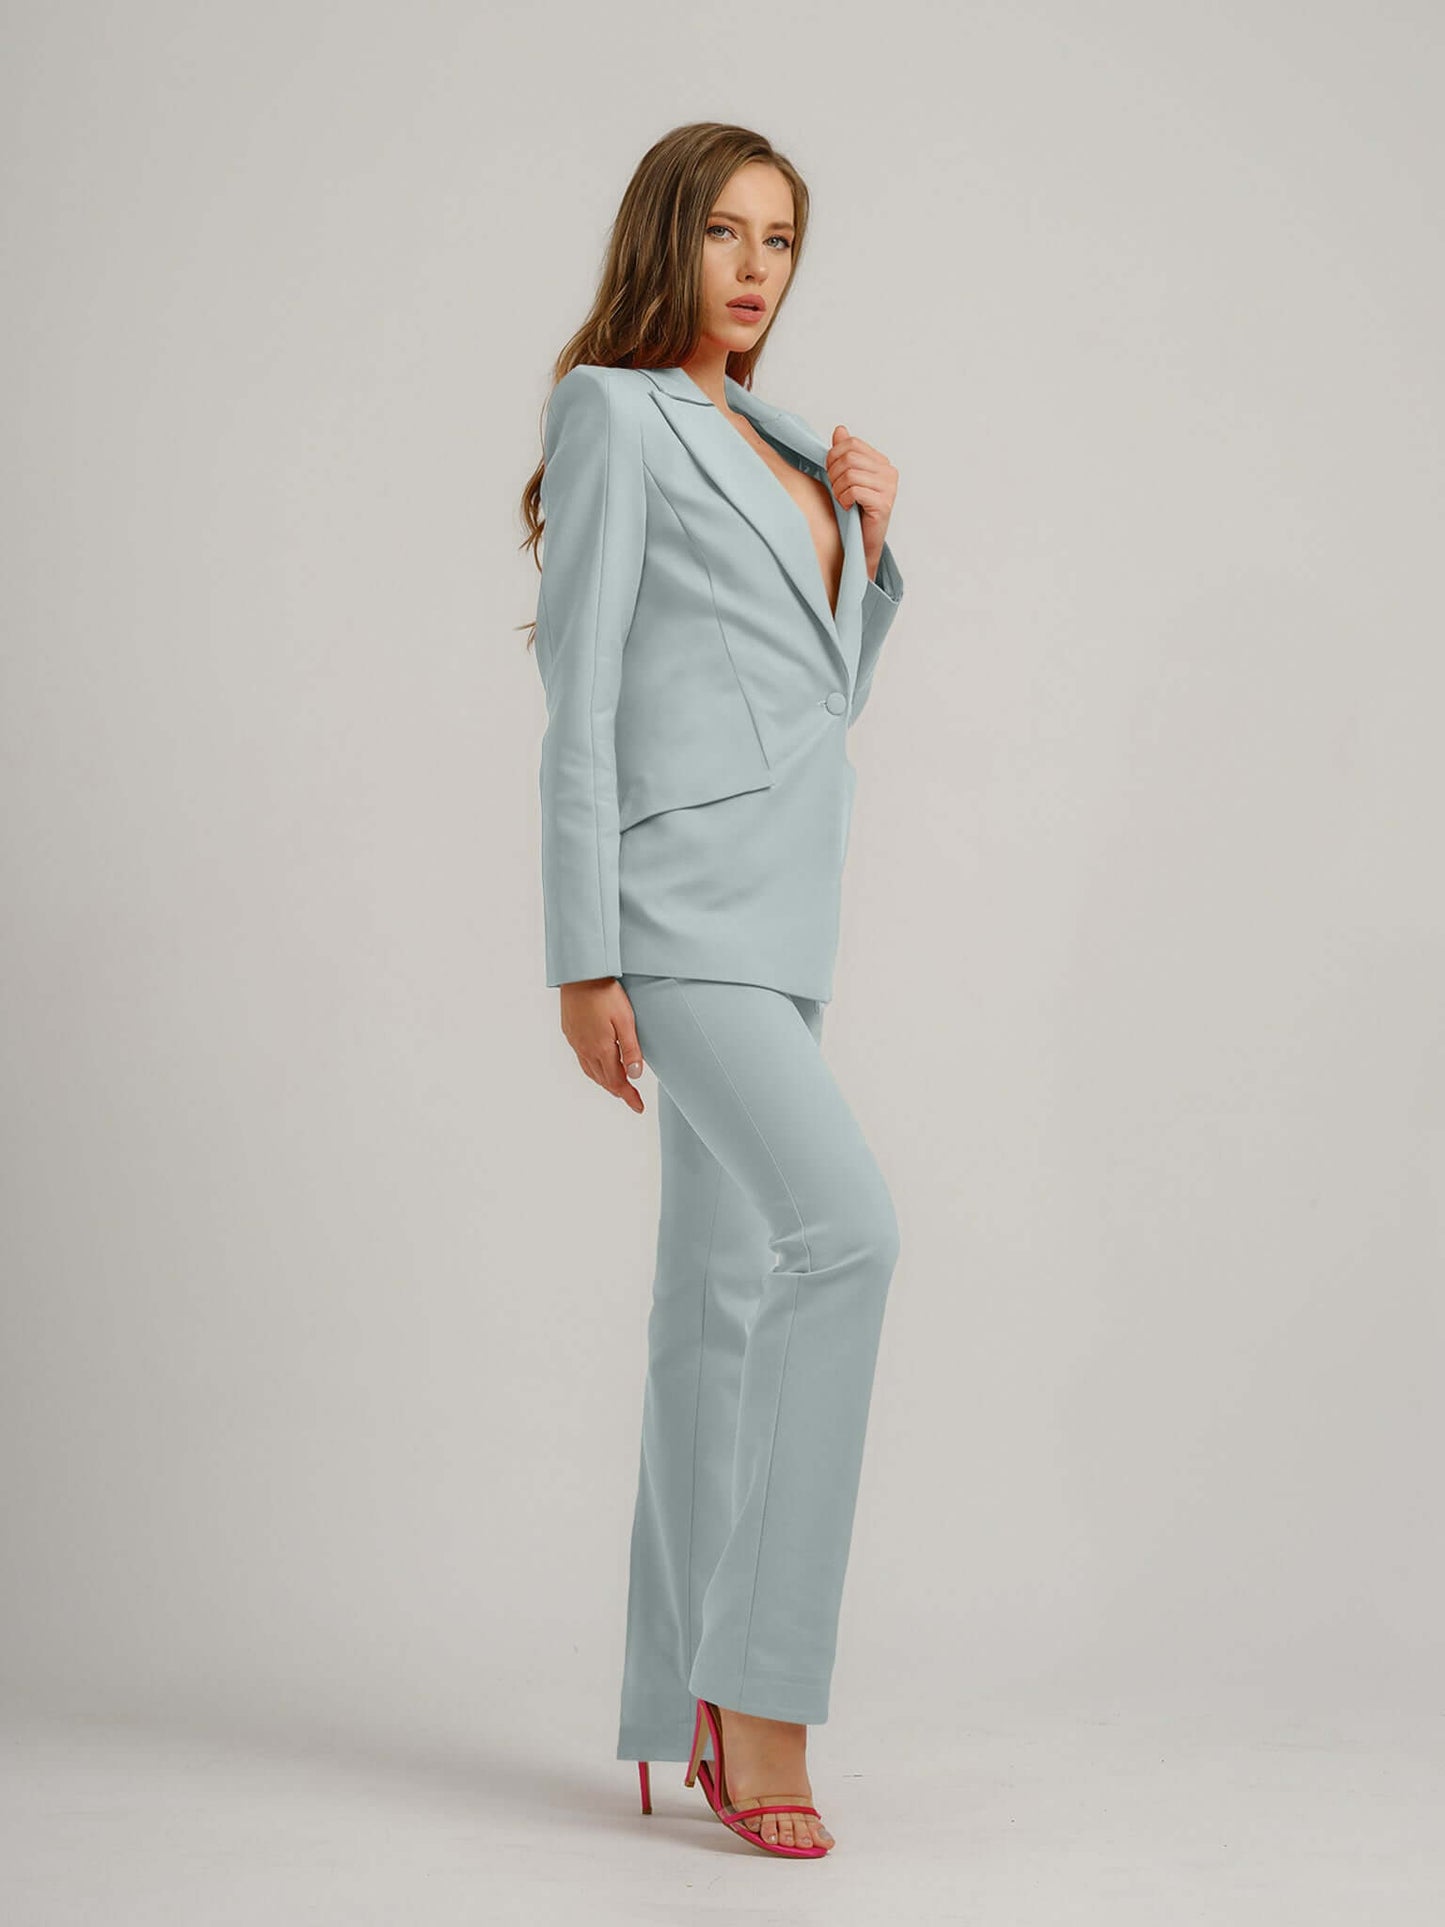 Fantasy Tailored Blazer - Light Blue by Tia Dorraine Women's Luxury Fashion Designer Clothing Brand